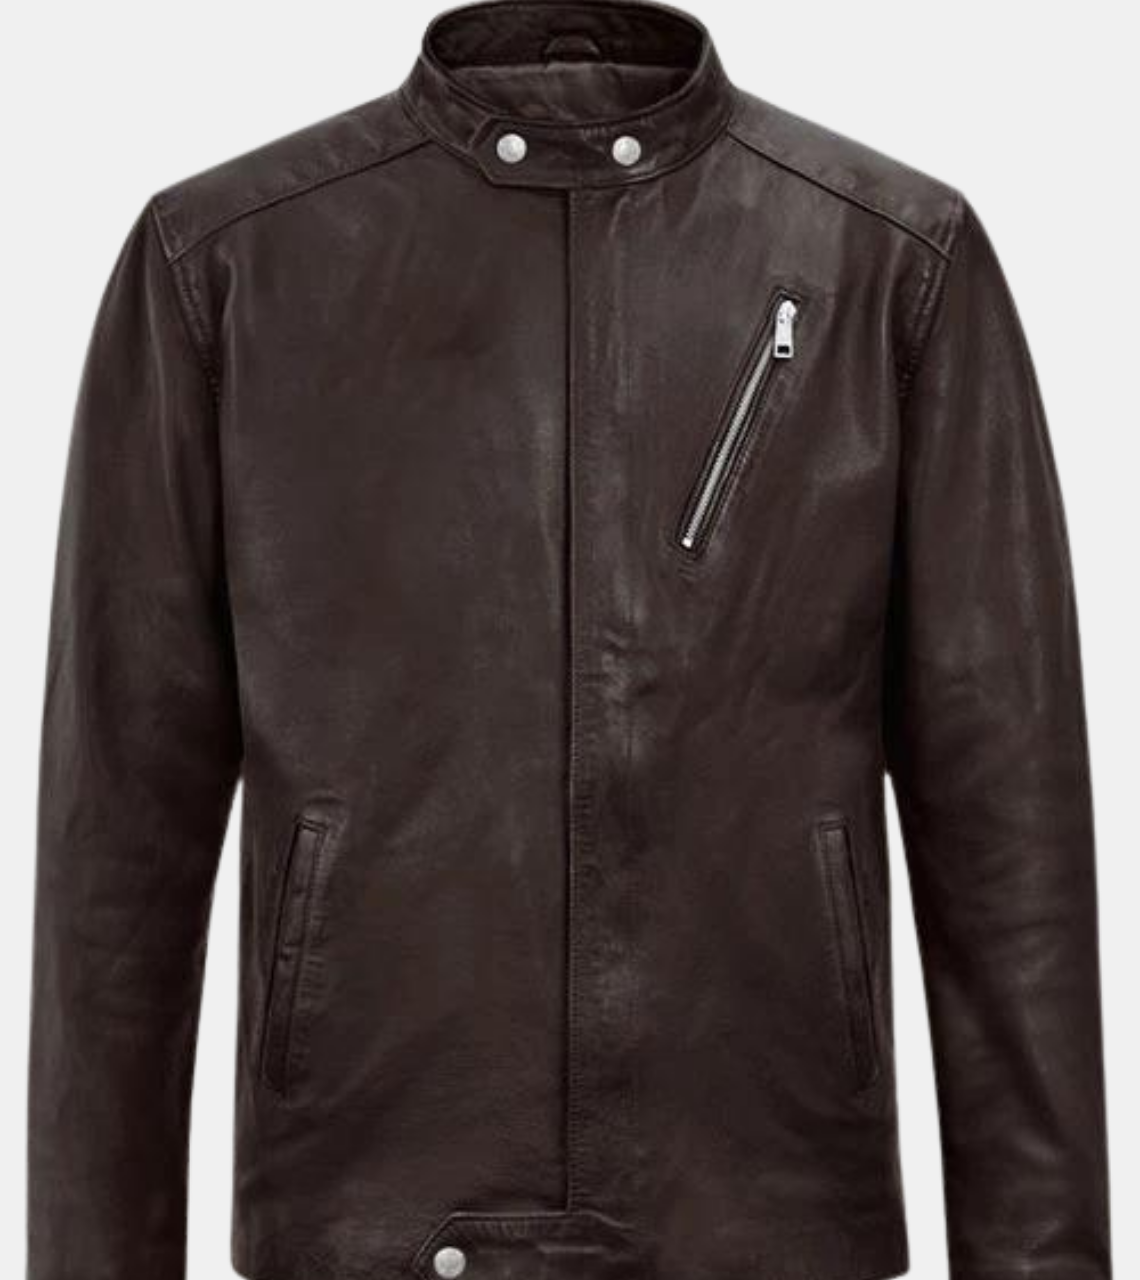 Gespare Men's Brown Biker's Leather Jacket